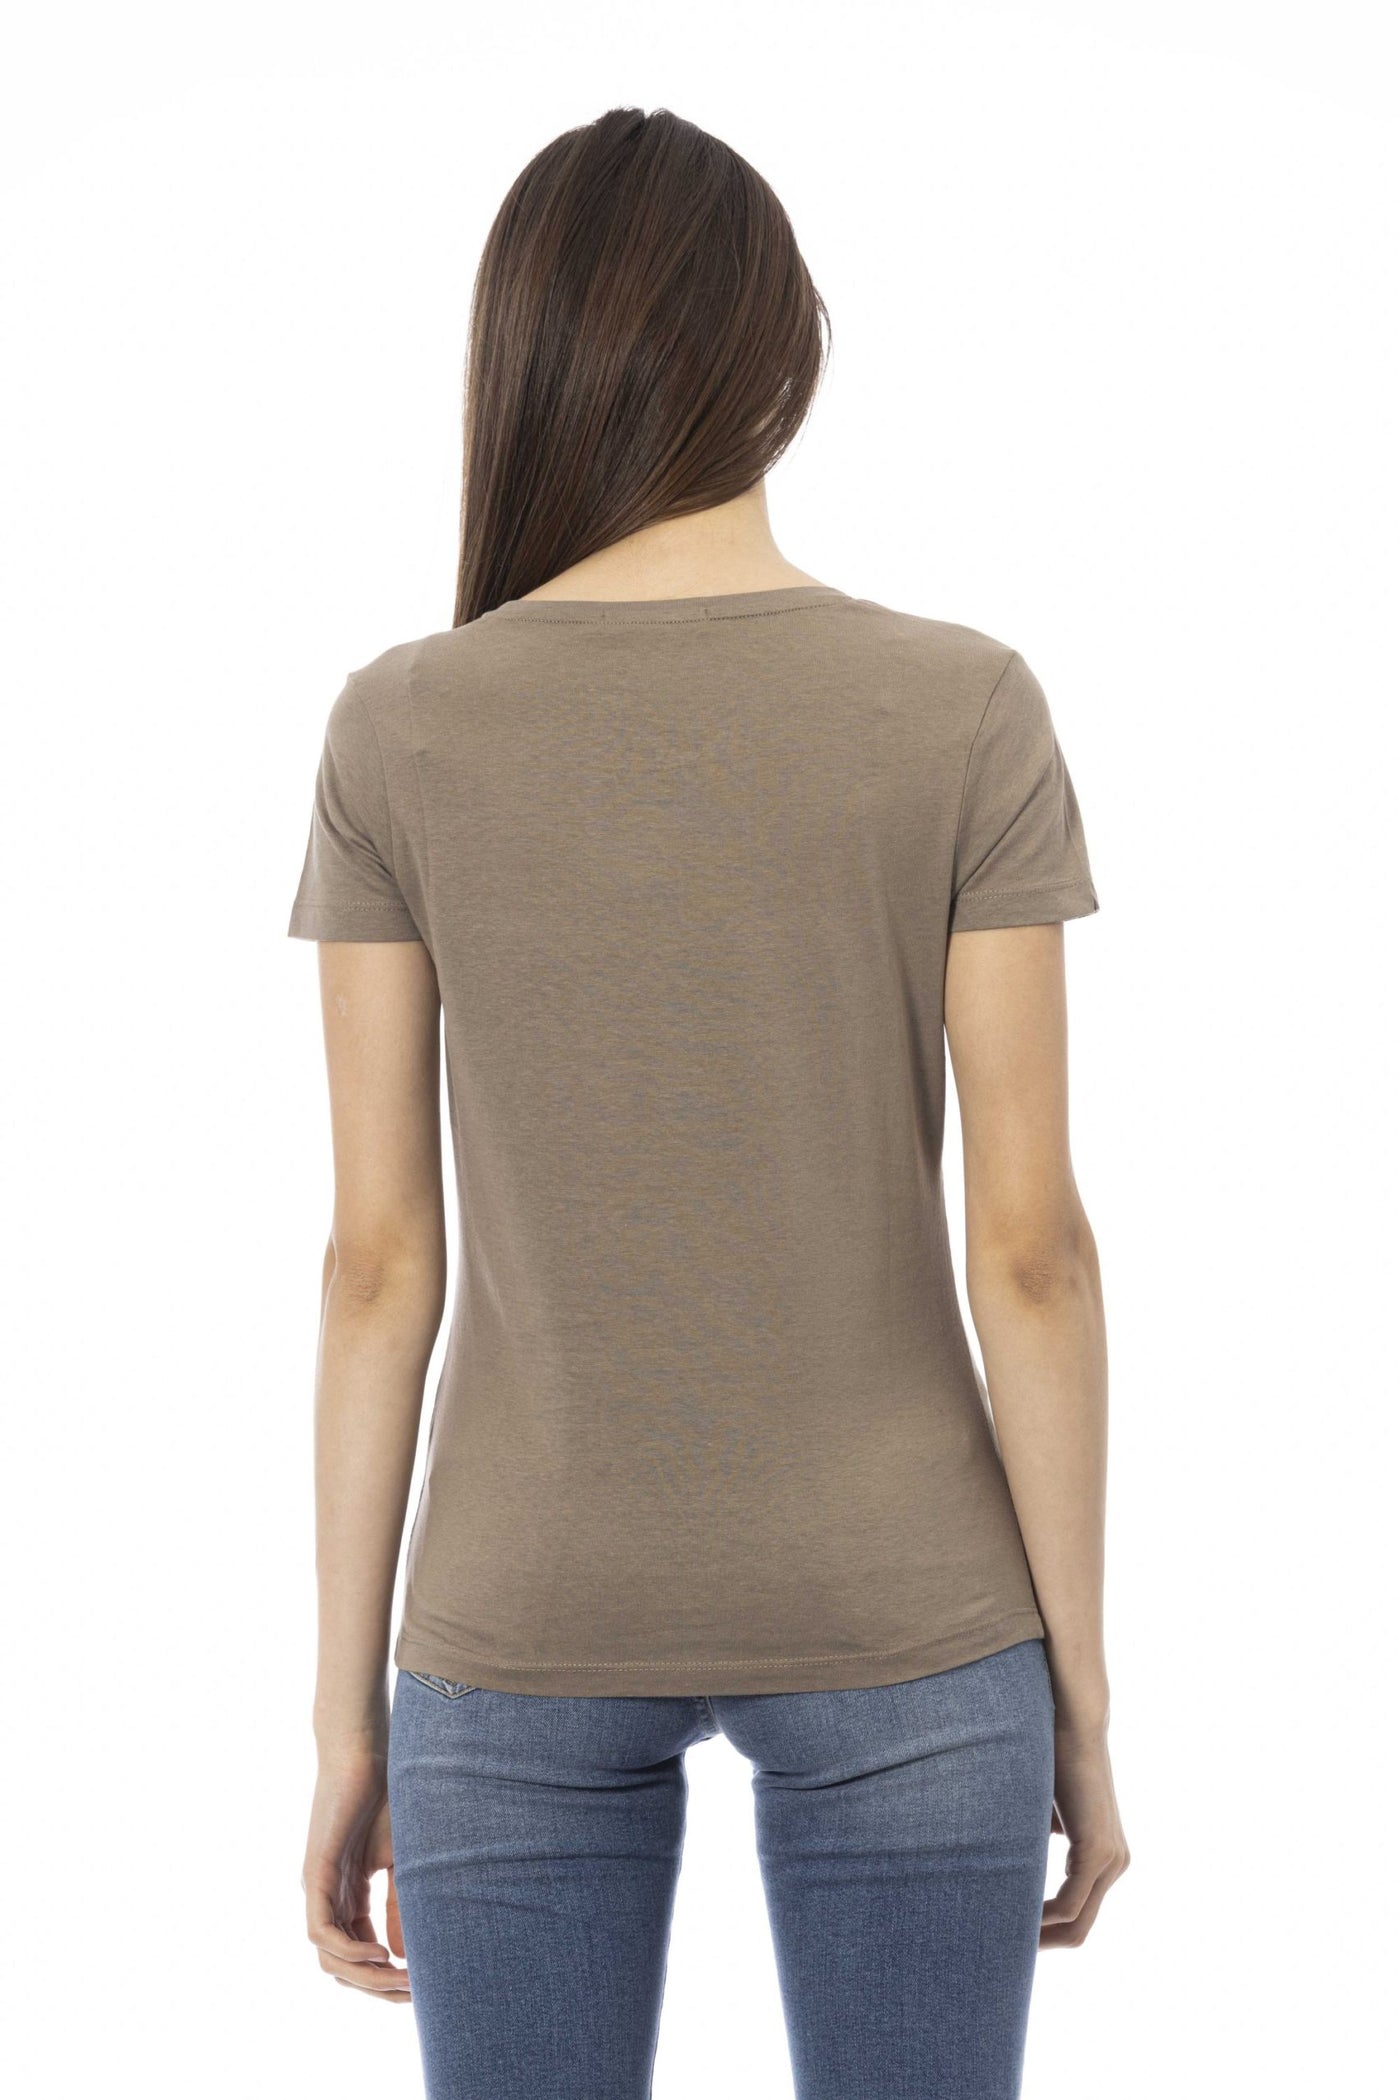 Trussardi Action Brown Cotton Tops & T-Shirt